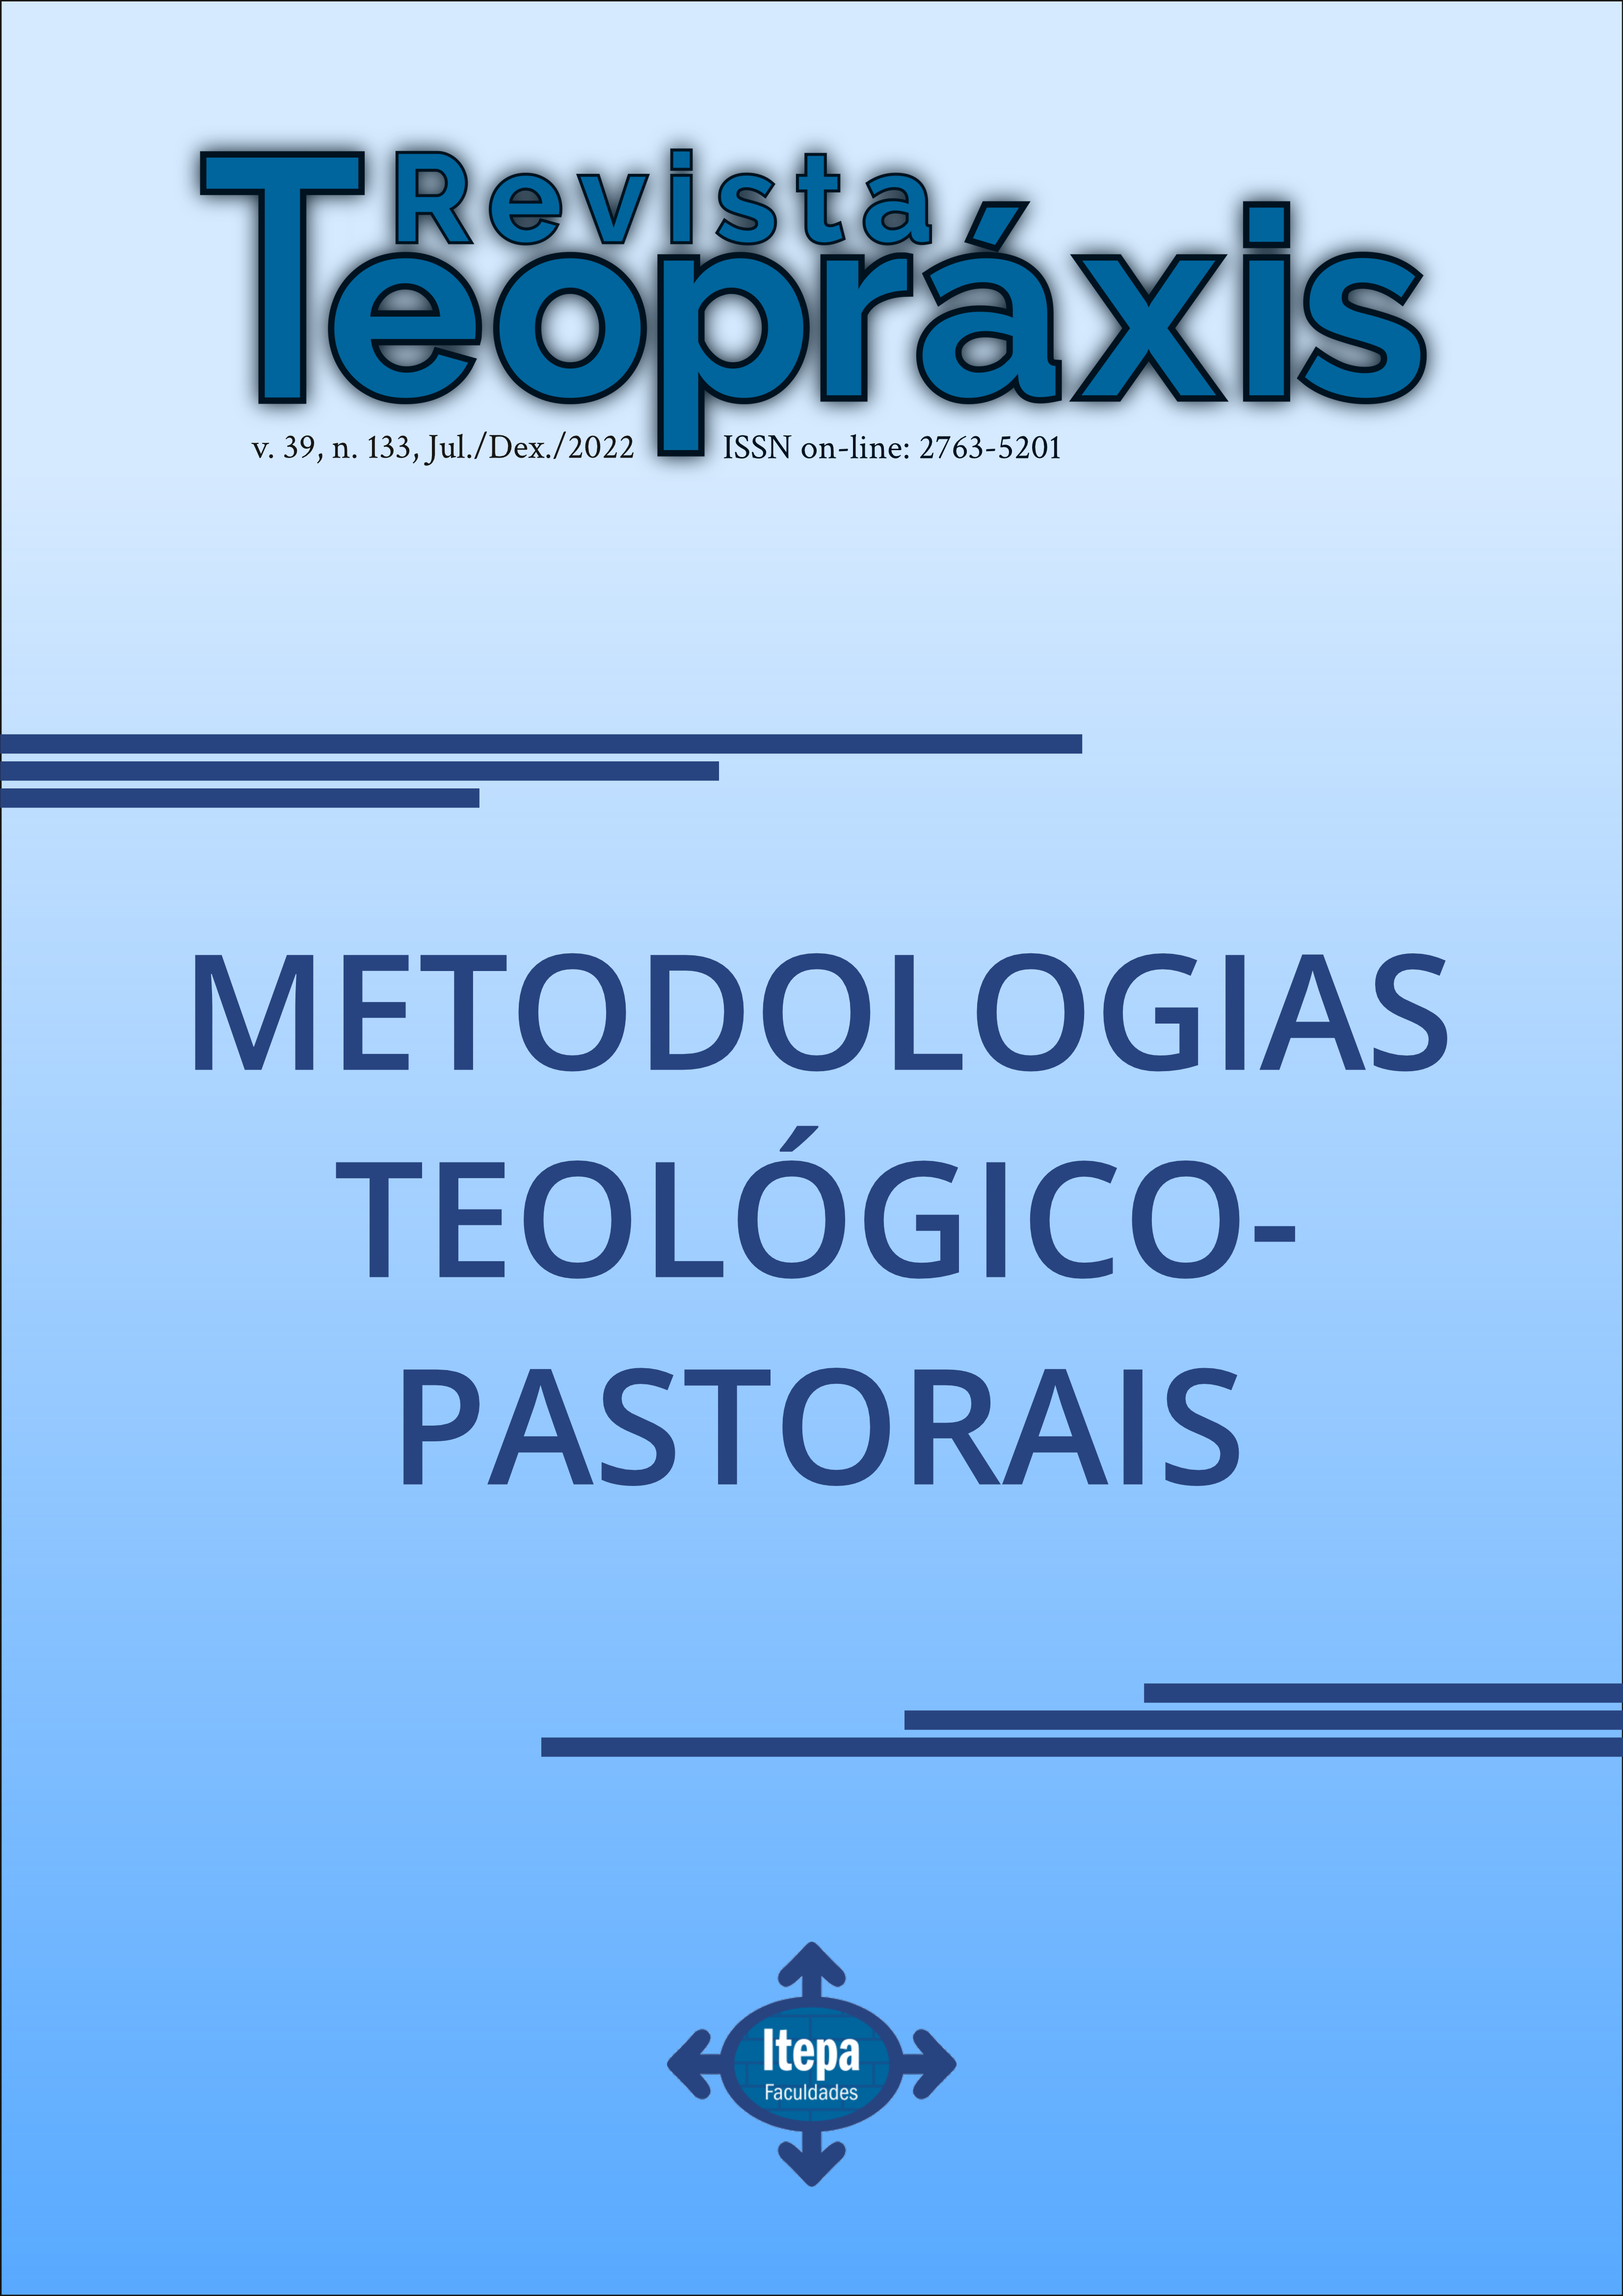 					Visualizar v. 39 n. 133 (2022): Metodologias teológico-pastorais
				